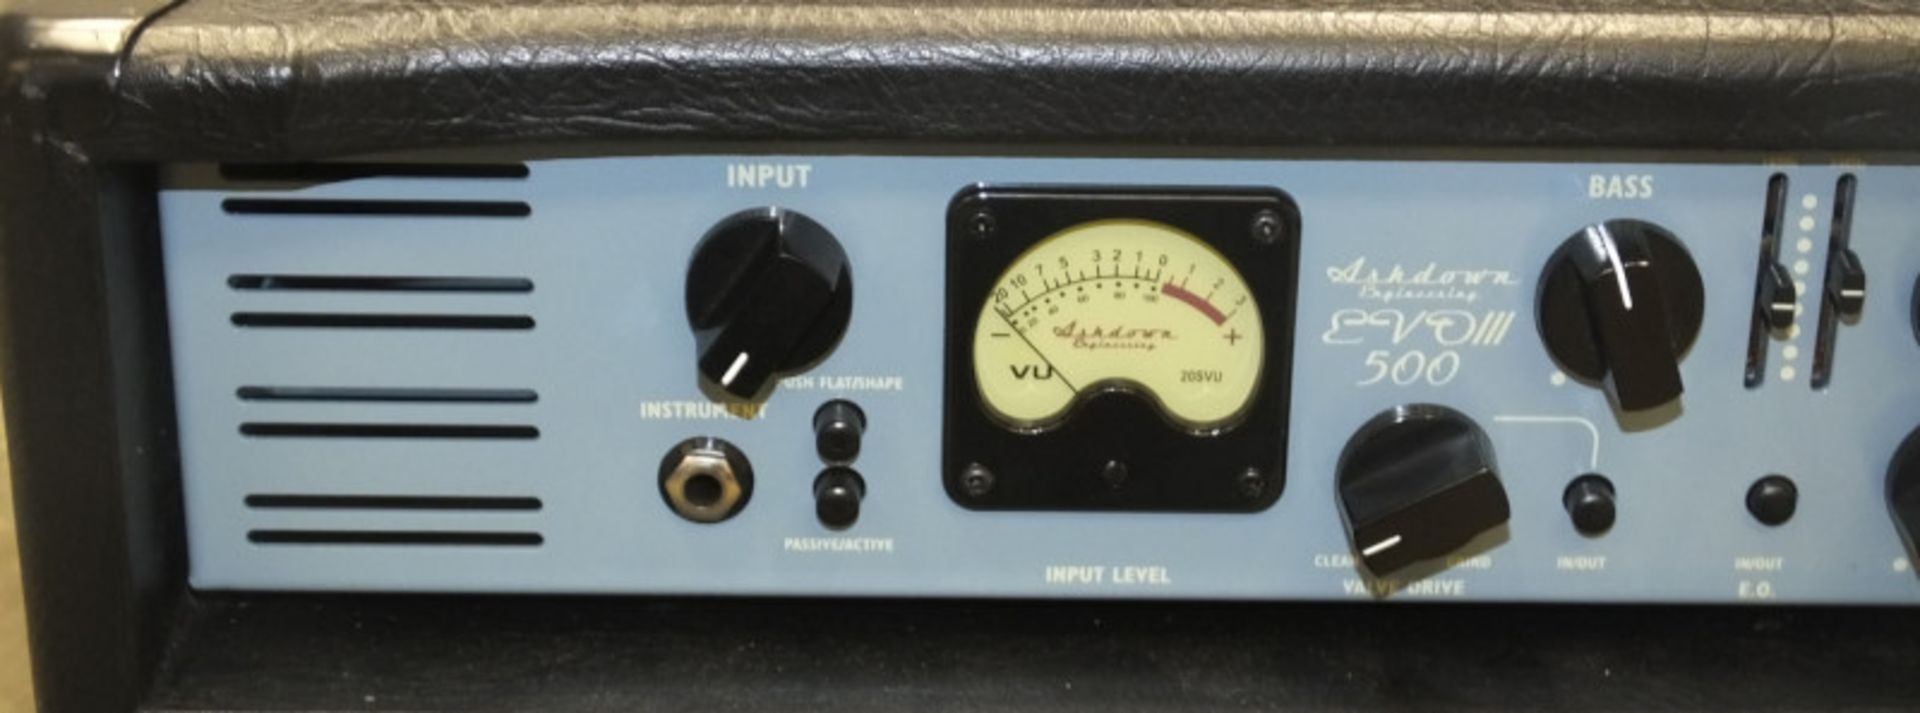 Ashdown EVOIII500 Combo Bass Amplifier - Image 3 of 10